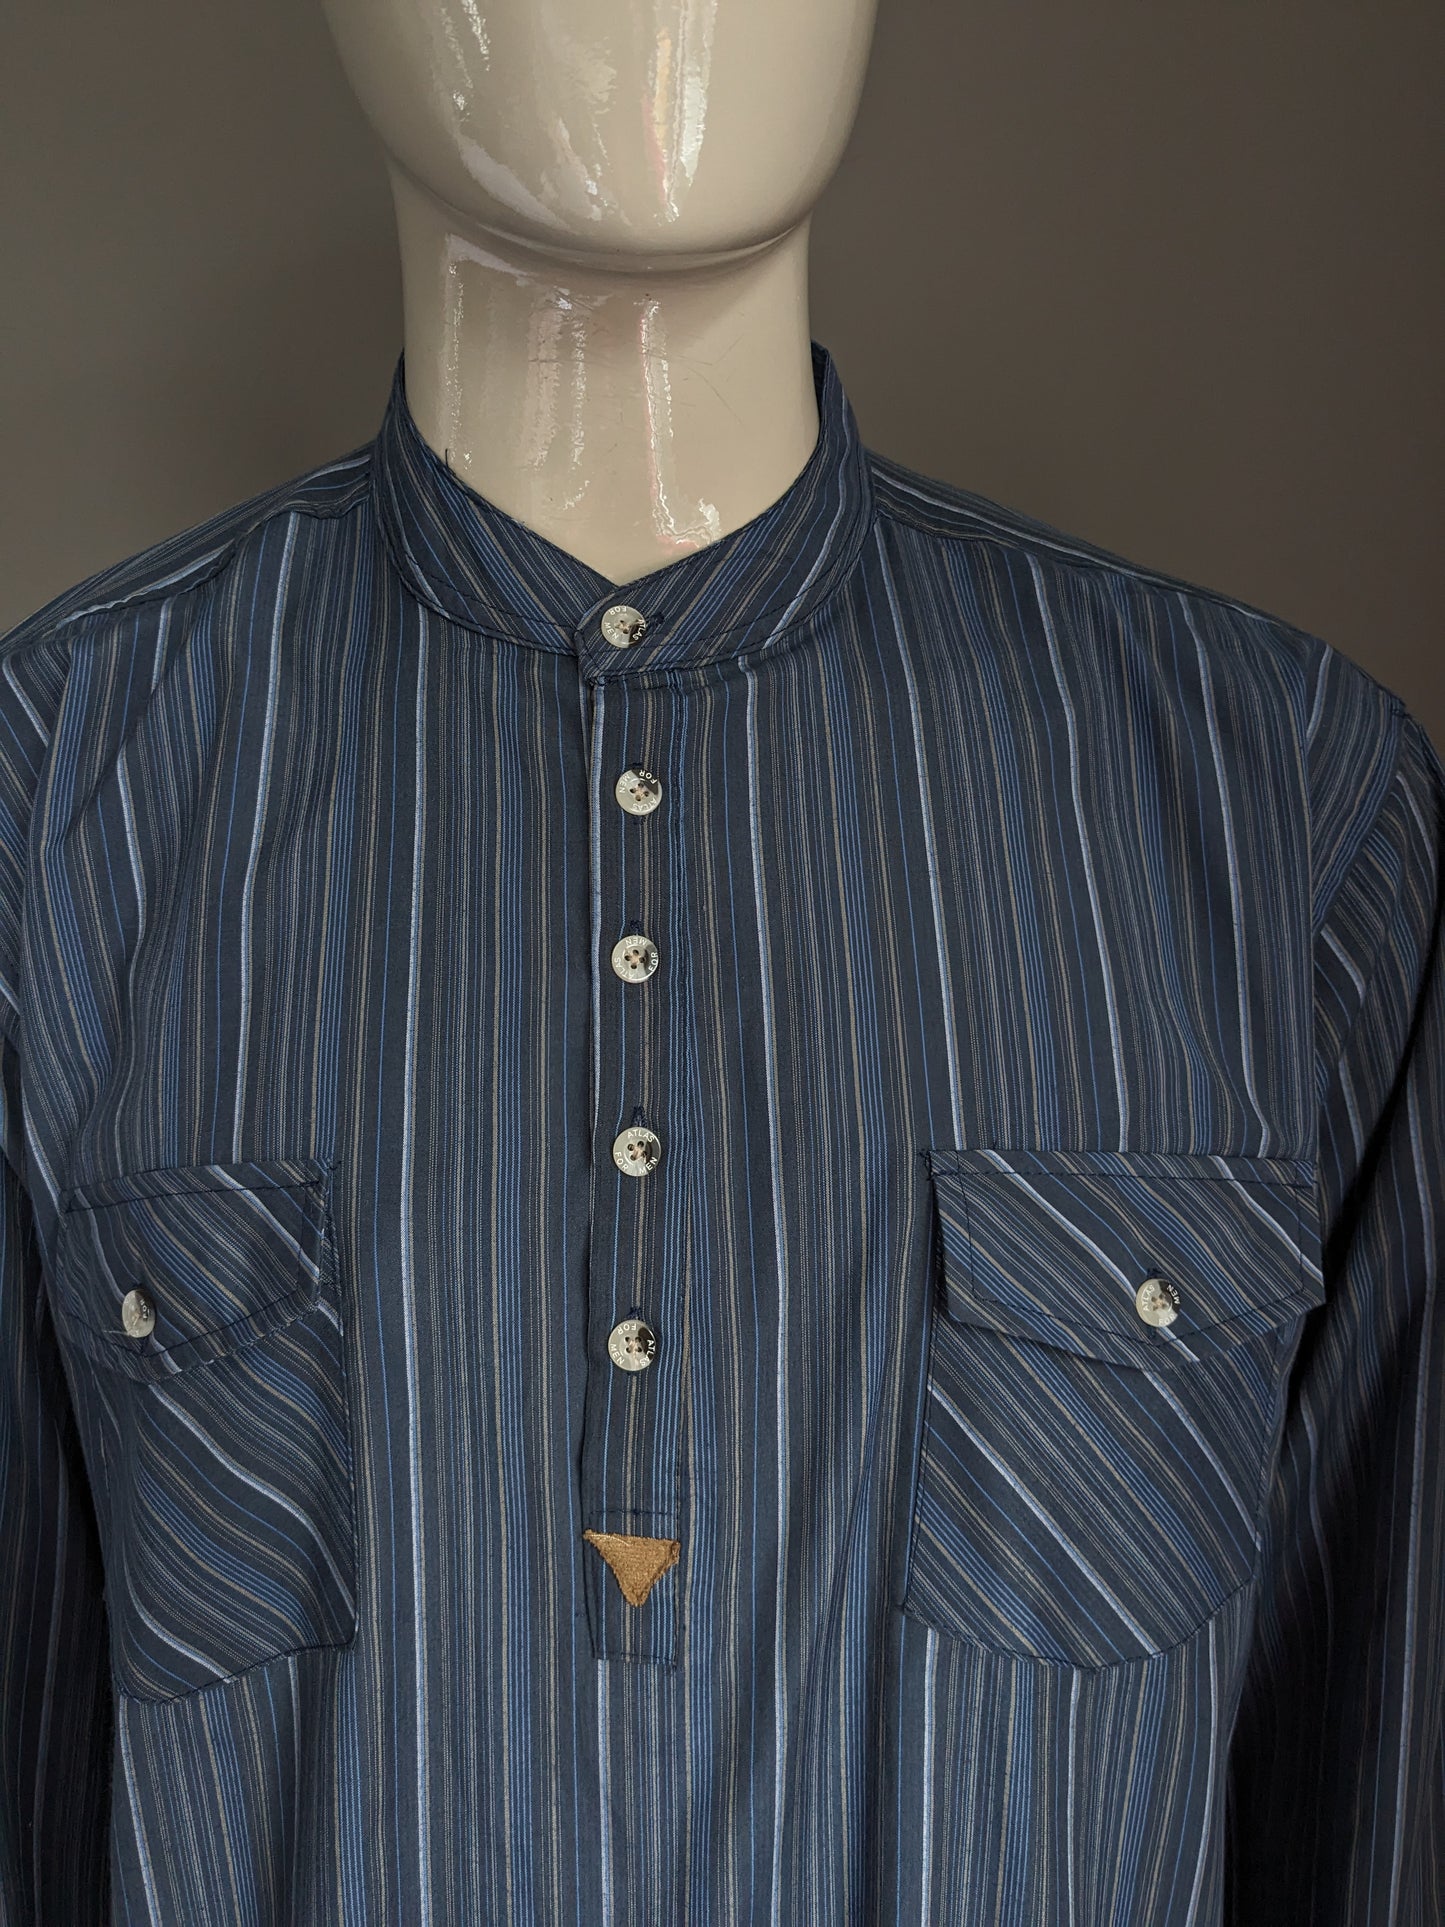 Atlas For Men Shirt Shirt with Rentight / Farmers / Mao Collar. Brun bleu rayé. Taille 2xl / xxl.